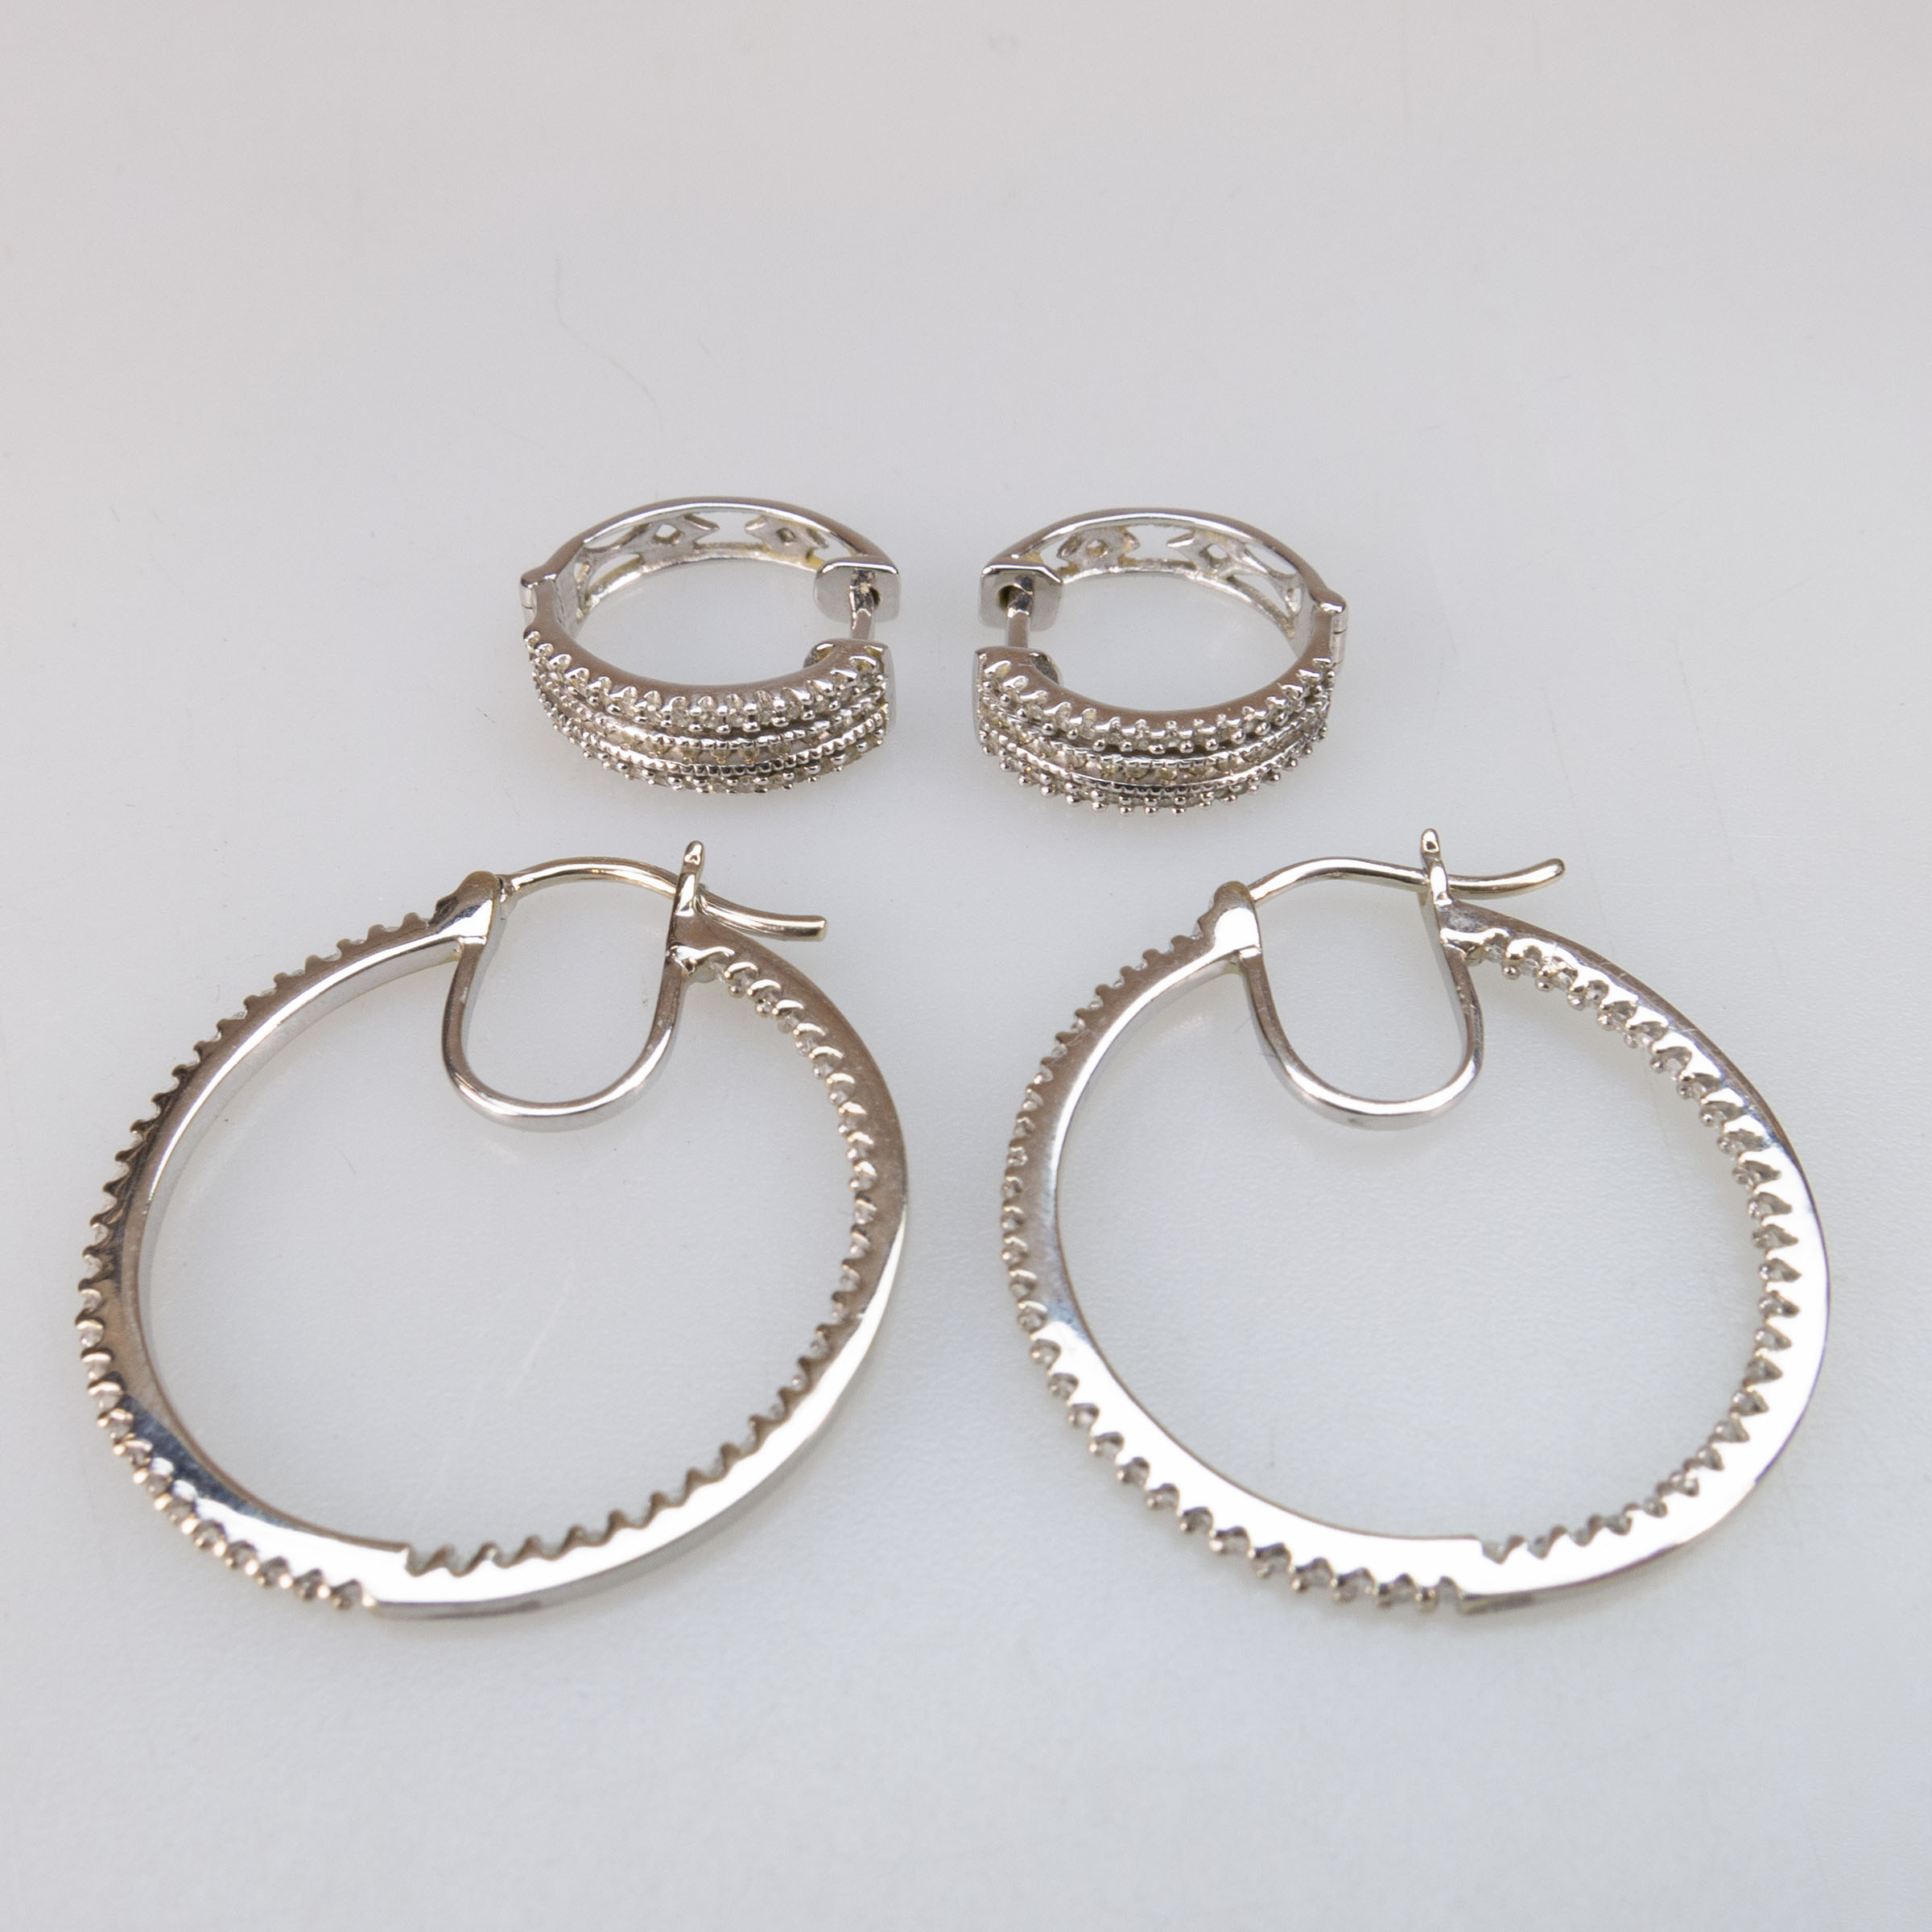 2 Pairs Of 14k White Gold Earrings